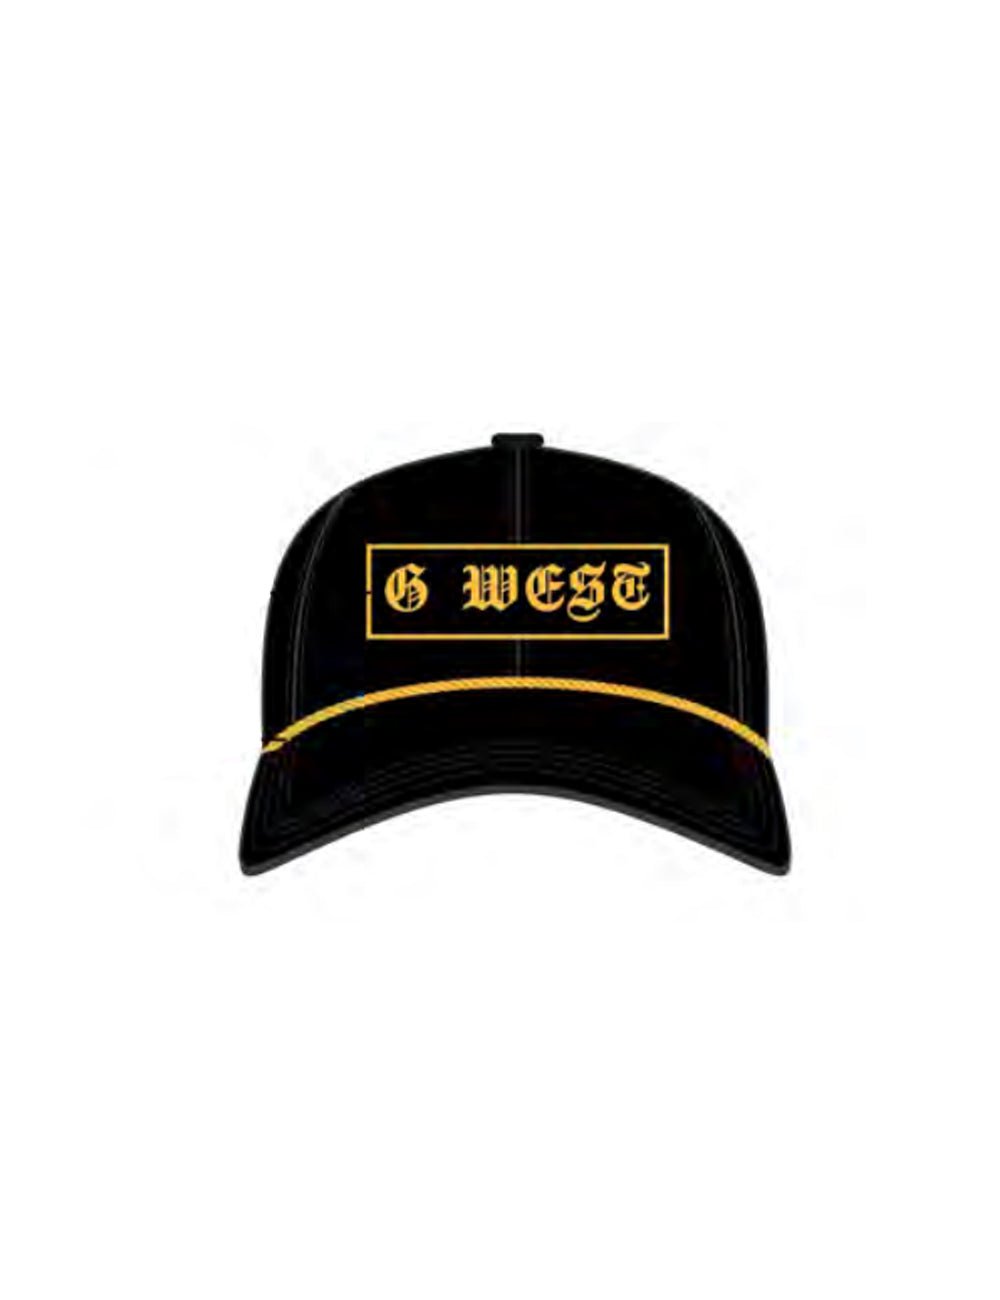 G WEST ROSE EMBROIDERED HAT - GWHT63014 - COLOR 4 - G West